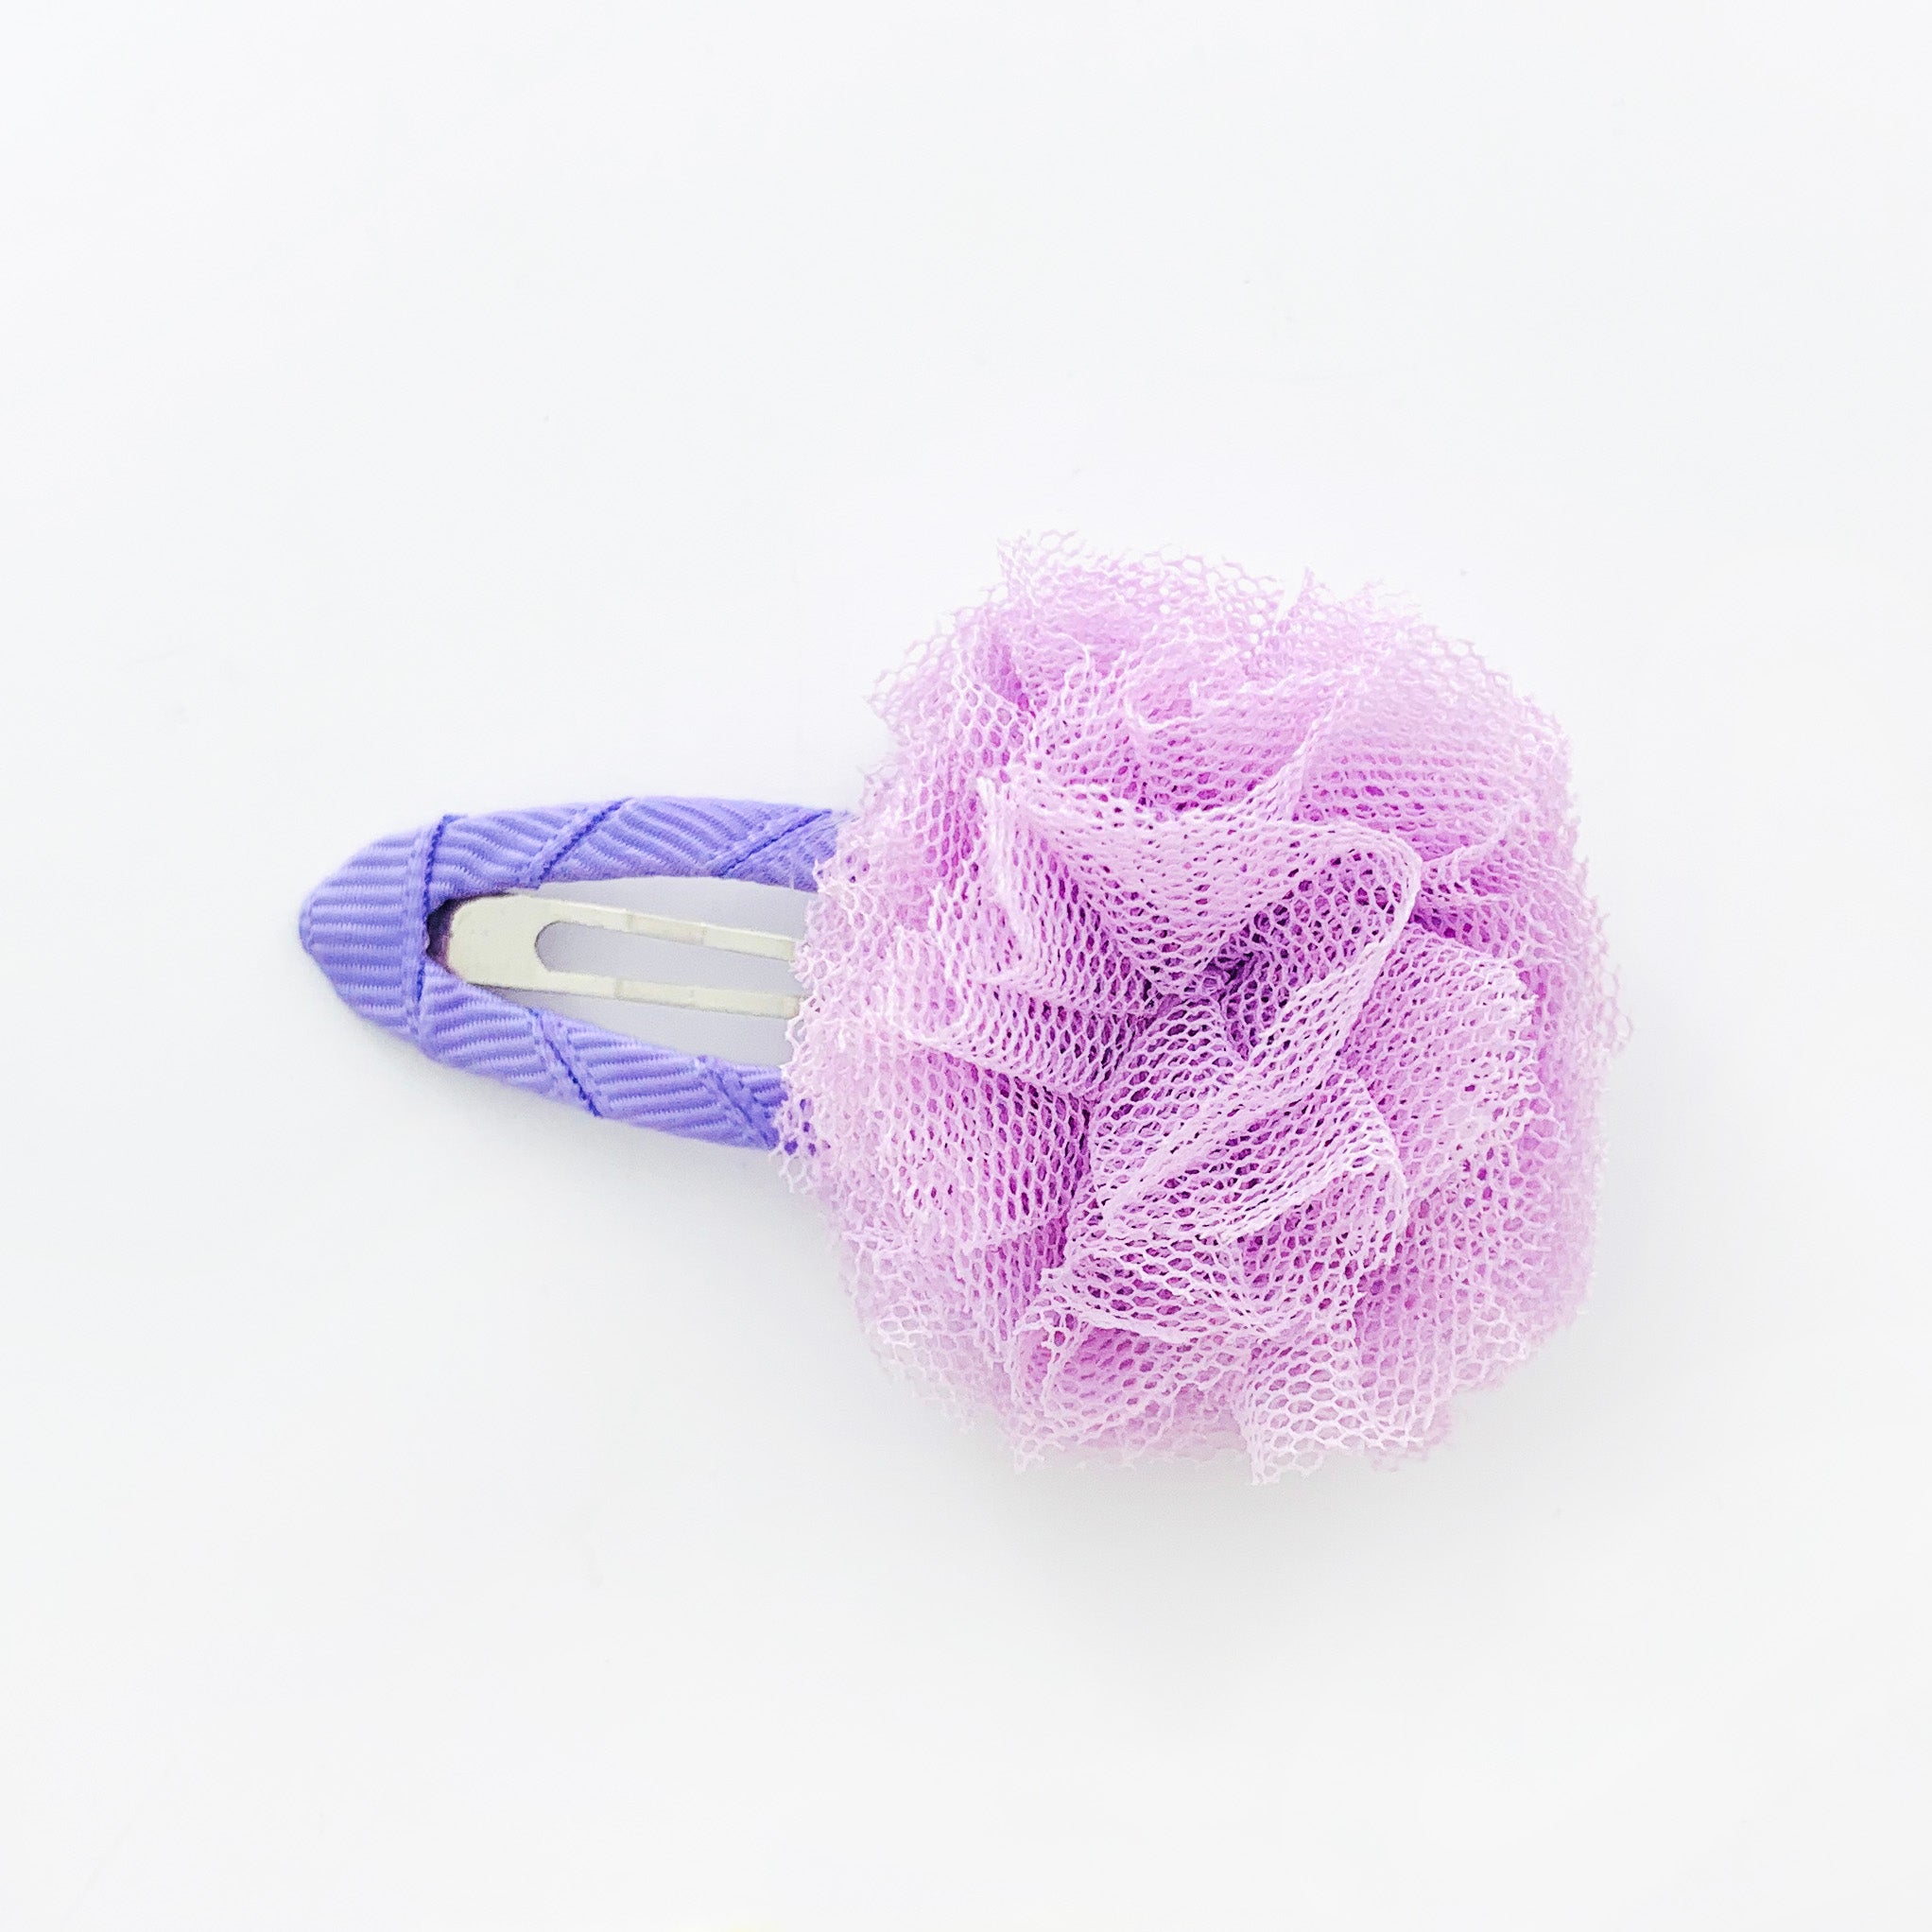 Hair clip with fluffy fabric lilac pom pom